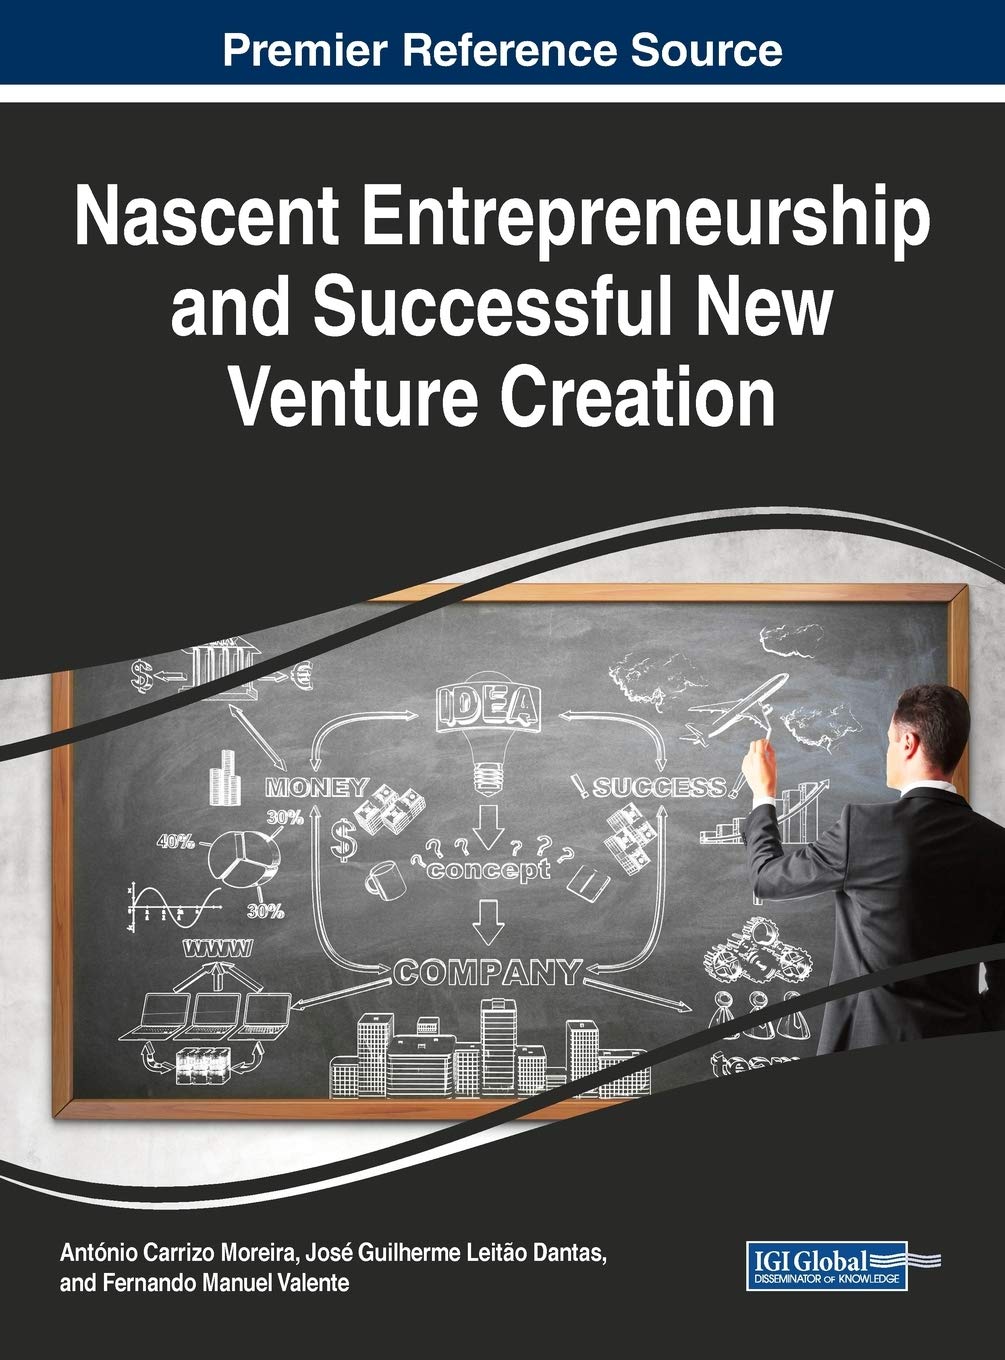 Imagen de portada del libro Nascent entrepreneurship and successful new venture creation